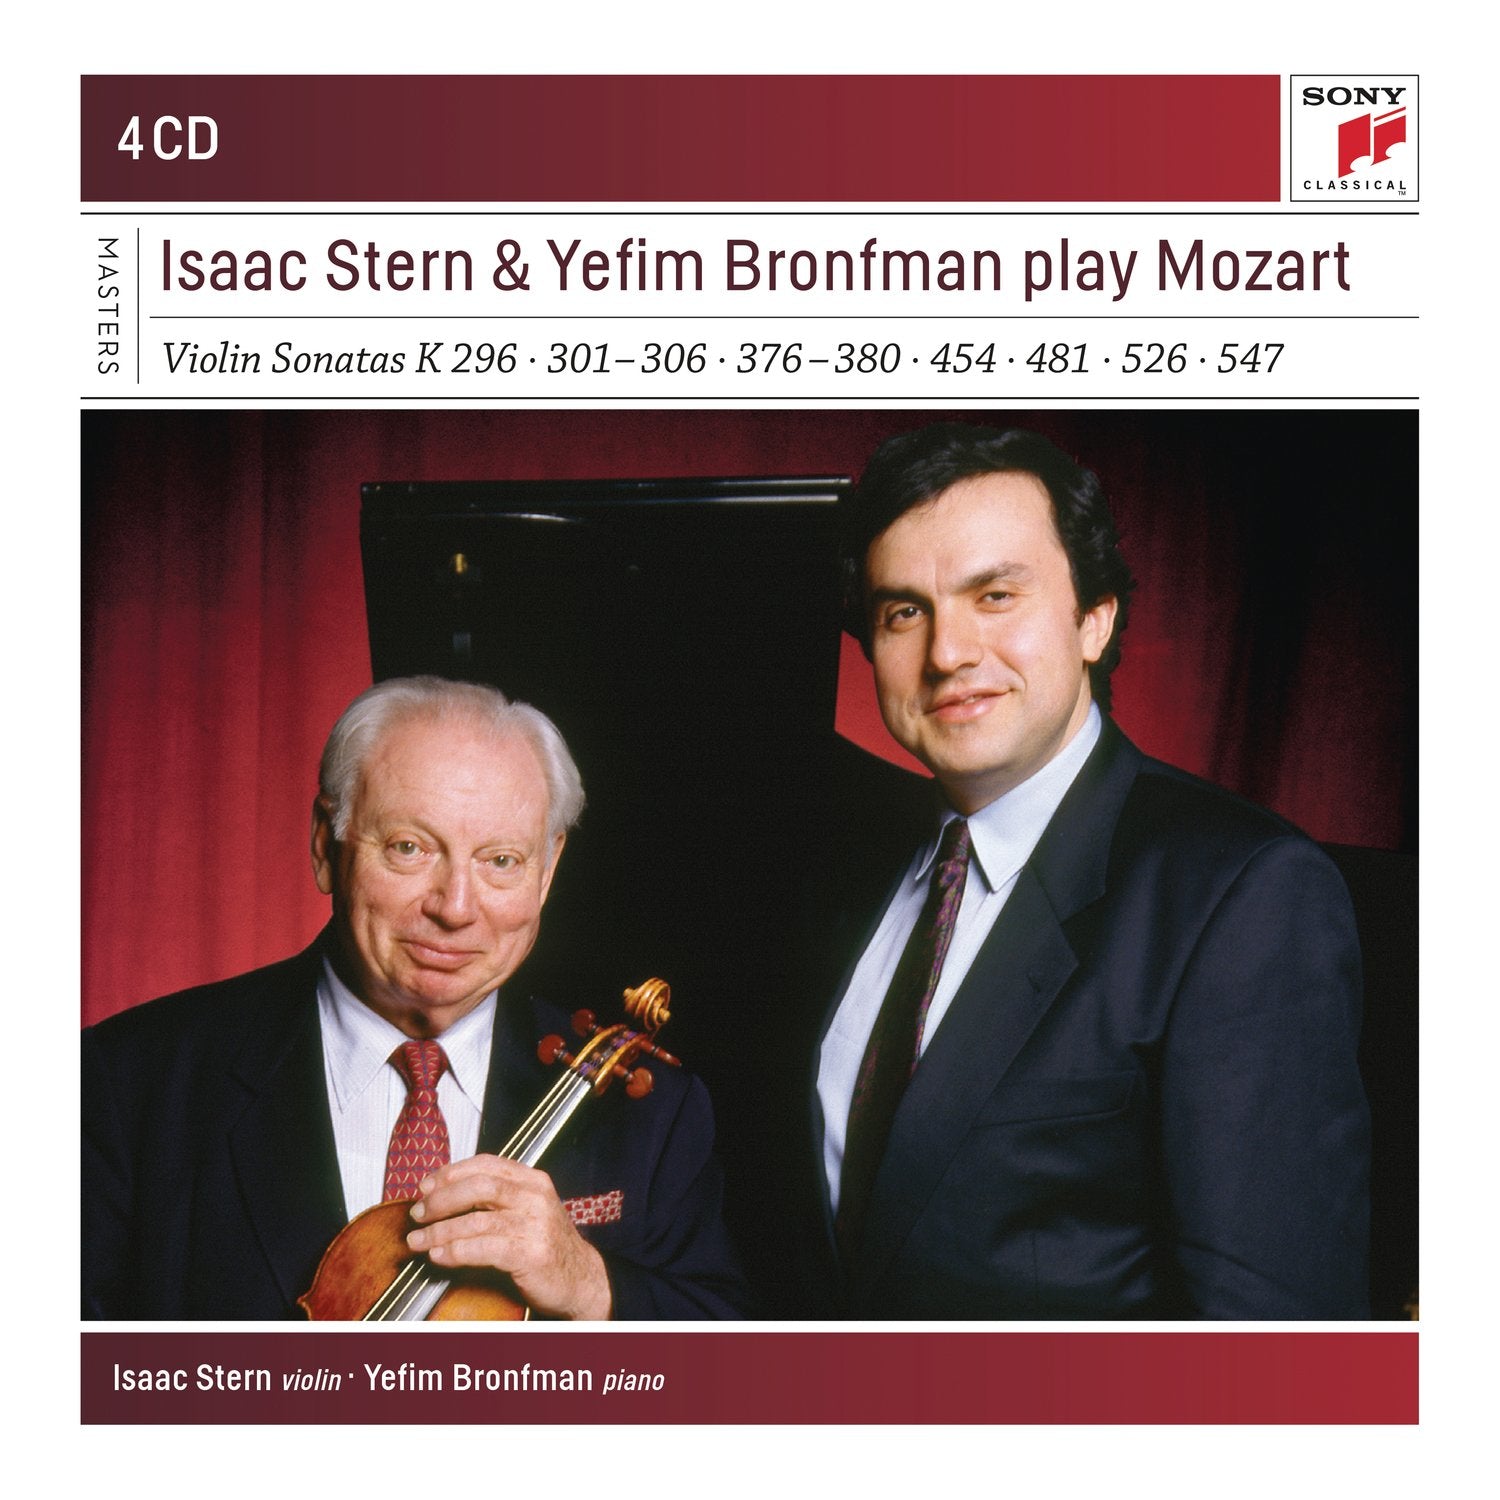 Isaac Stern & Yefim Bronfman play Mozart